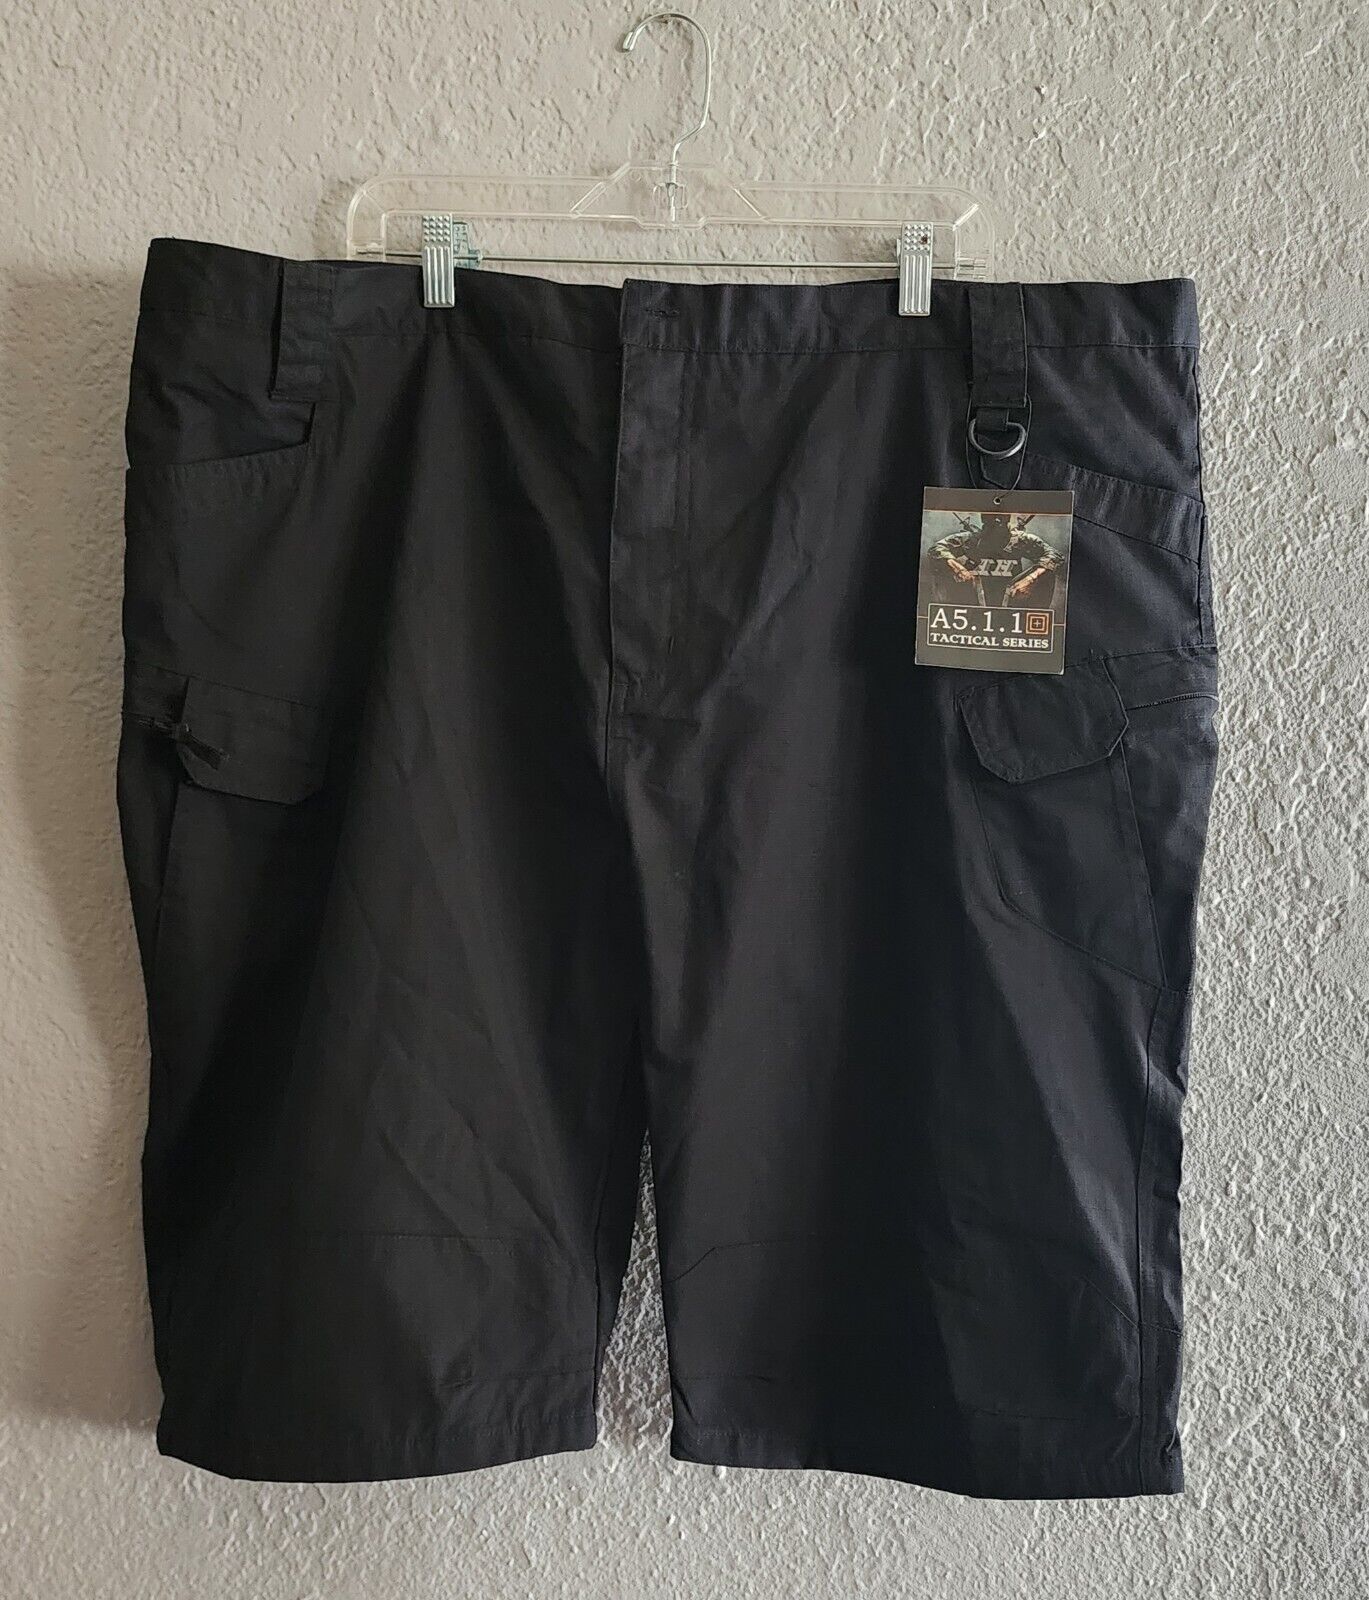 A5.1.1 Military Walker Outdoor Leisure Pants Women 8XL Flat Front 9 Pocket 